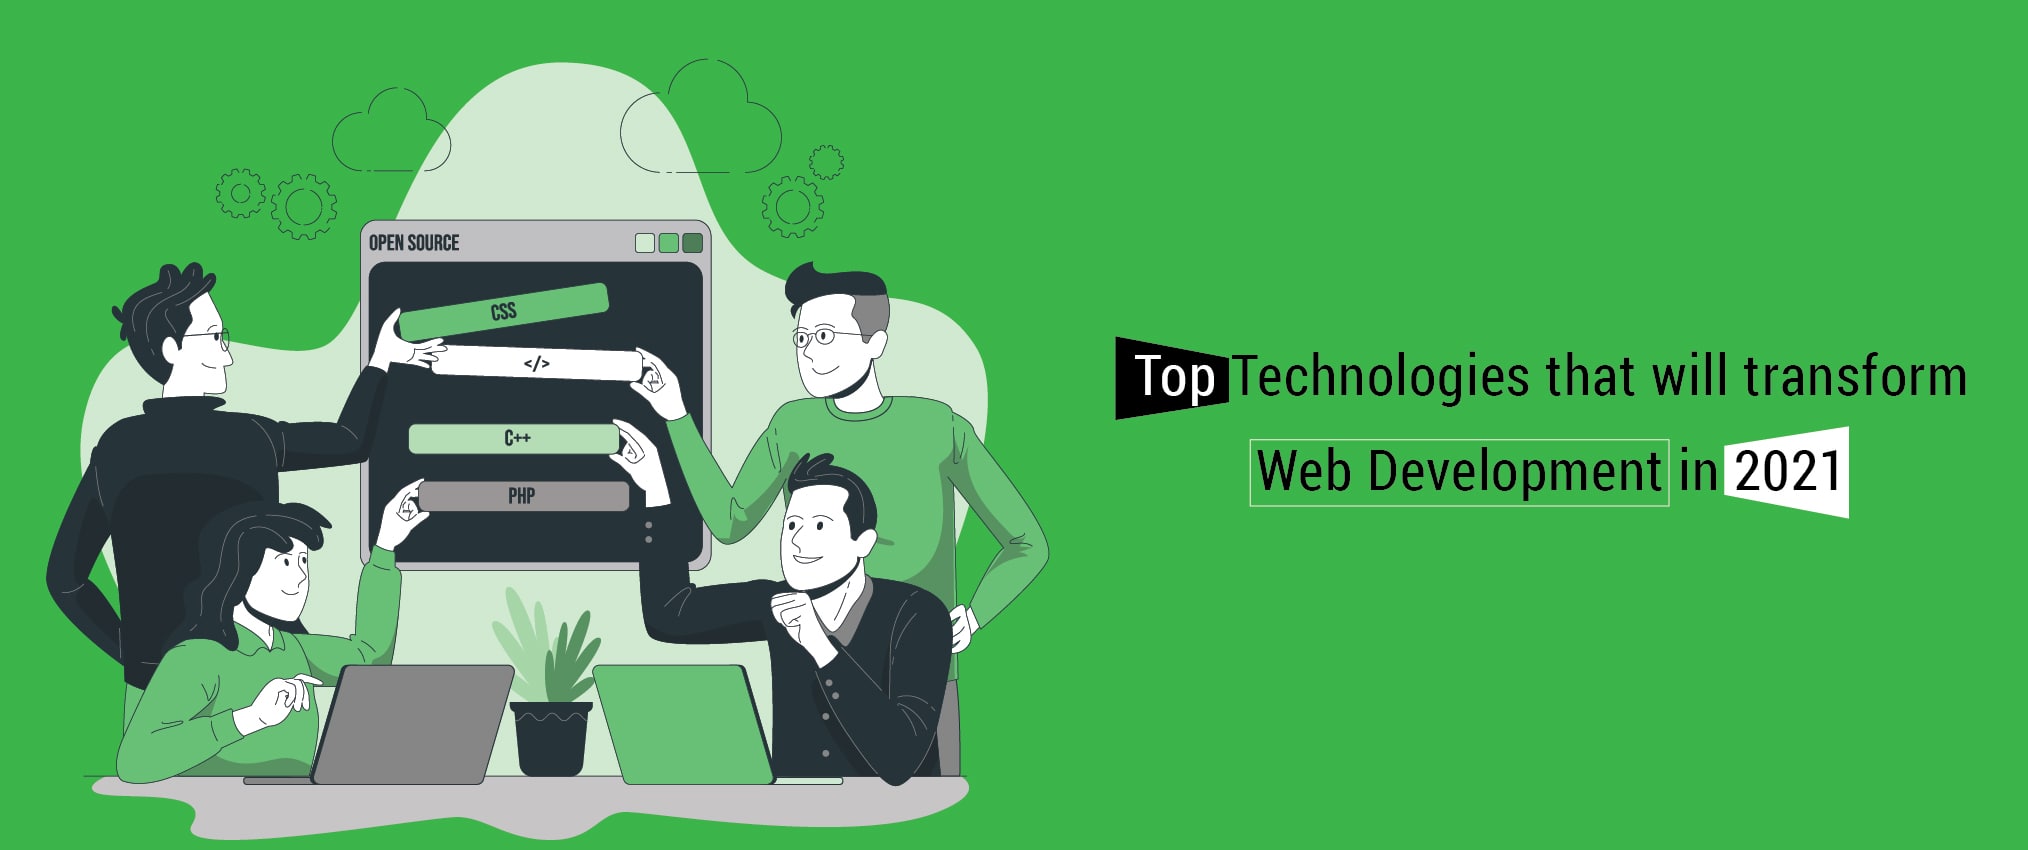 Top Technologies that will transform web development in 2021